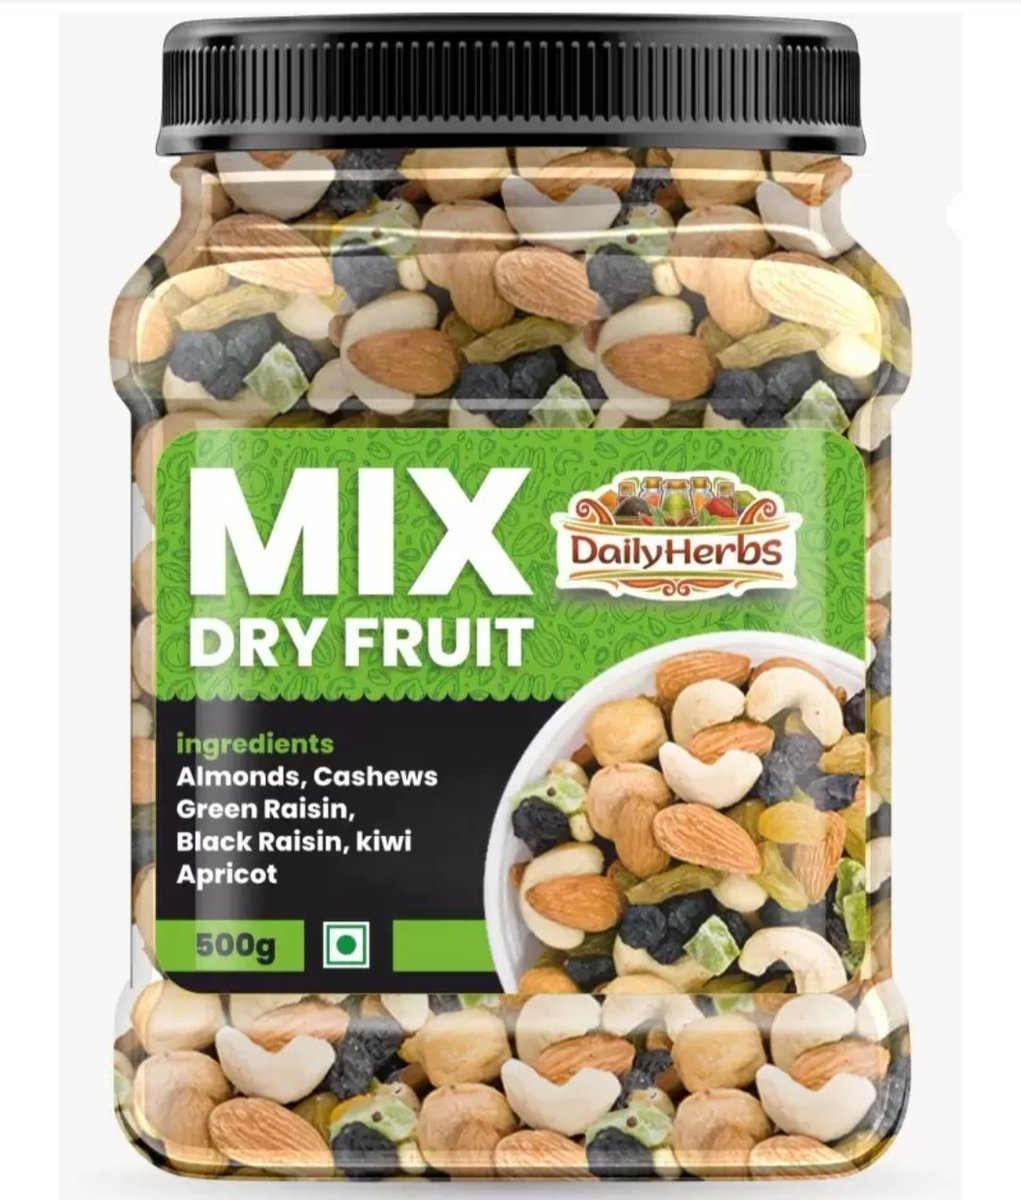 💥500g Premium Nutmix Only ₹269/-

Link ➡️ fktr.in/MYanaEJ

#mixednuts #nuts #almonds #healthyfood #cashews #cashew #cashewnuts #almond #pistachio #walnuts #food #peanuts #snack #walnut #dryfruits #healthy #healthysnacks #kaju #chocolate #hazelnuts #badam #homemade #vega